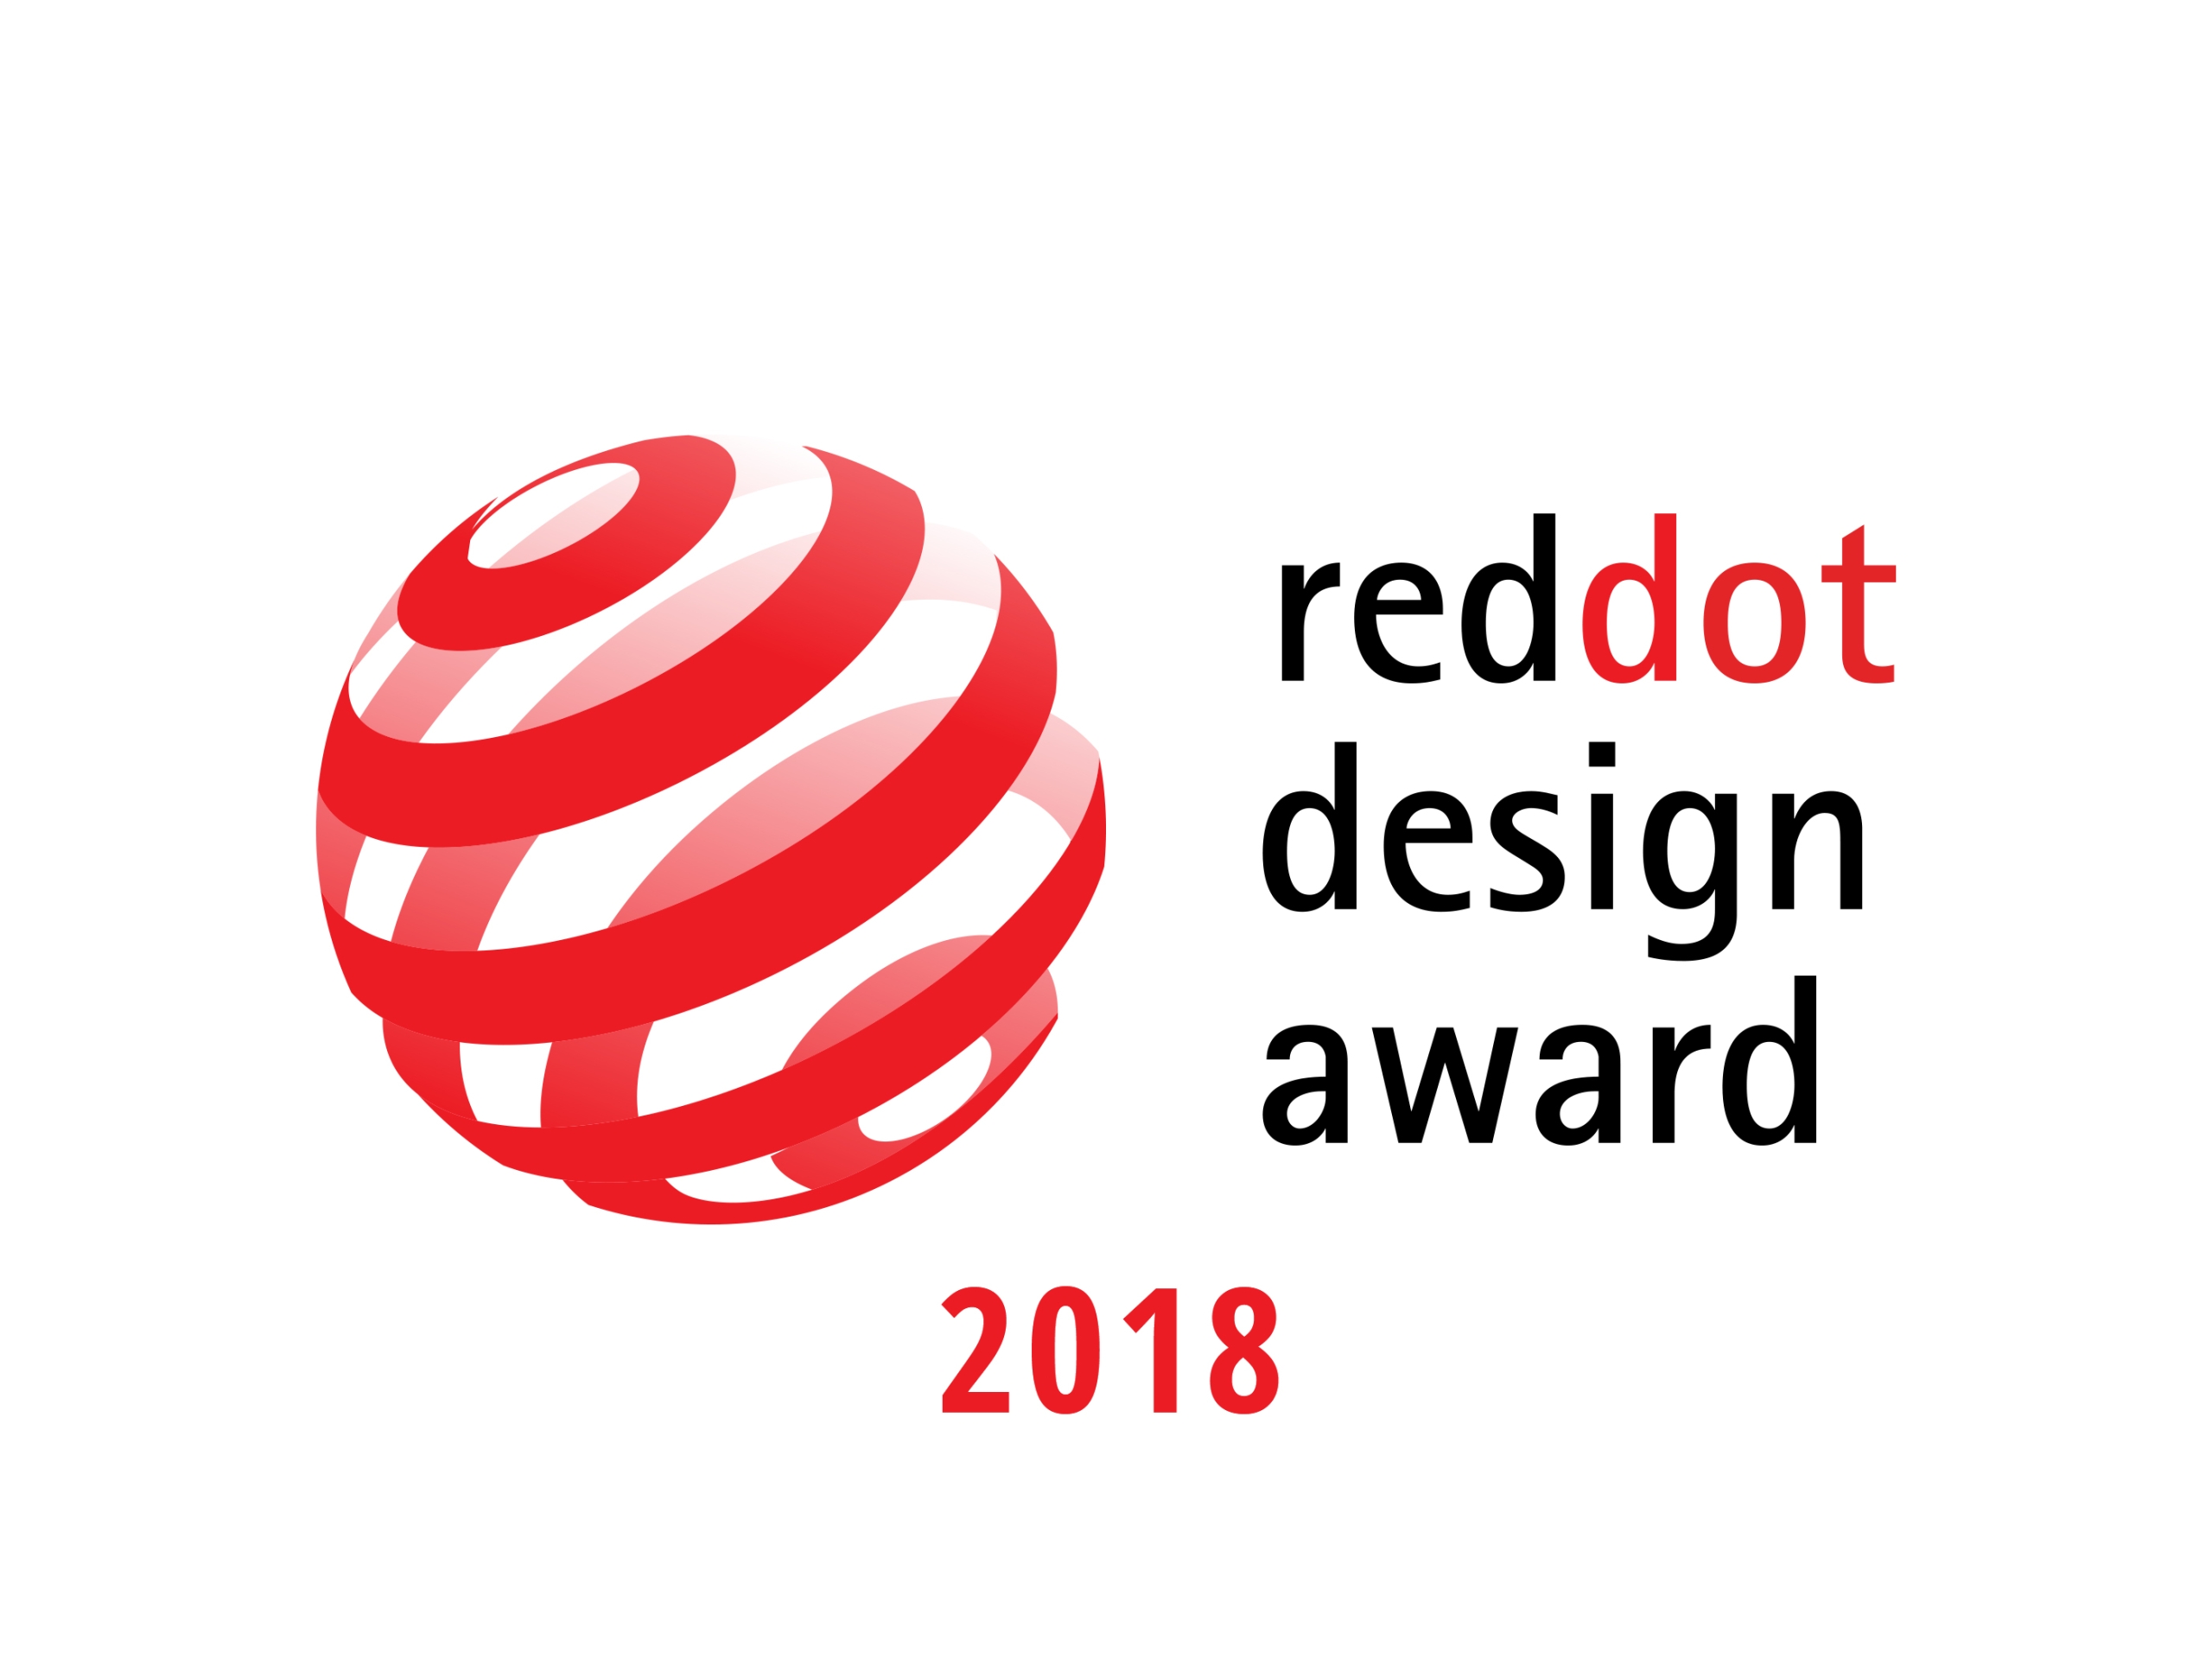 reddot design award 2018 scaled